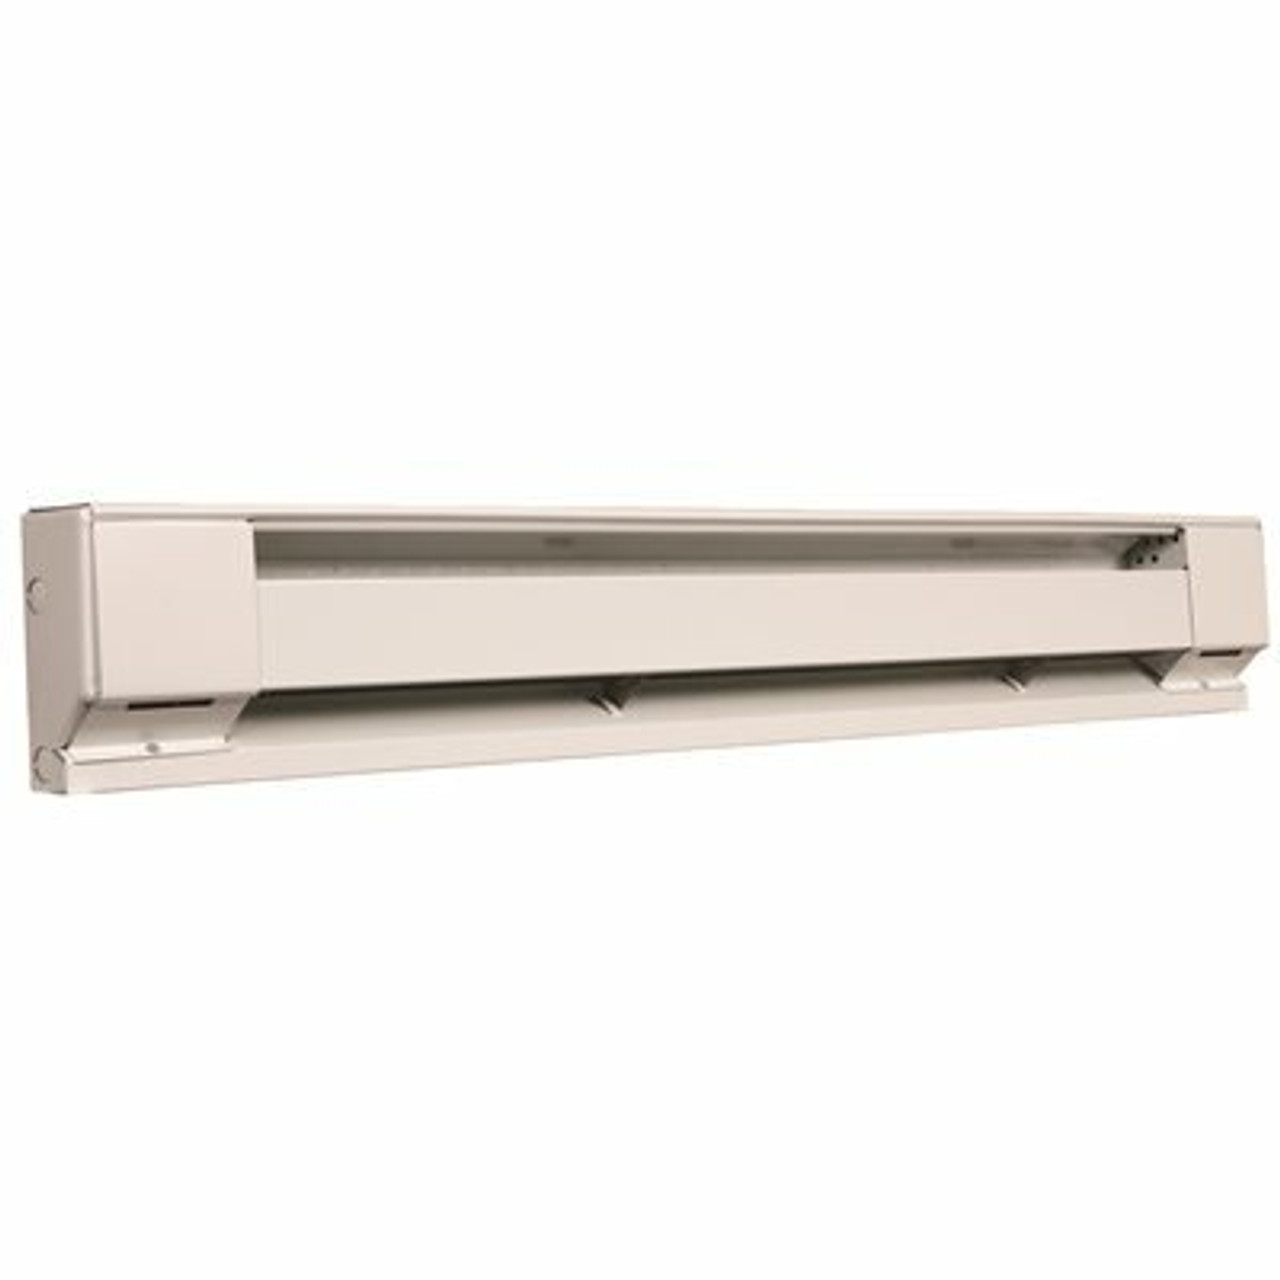 Marley Engineered Products Baseboard Heater 1000W 48" - 1633385